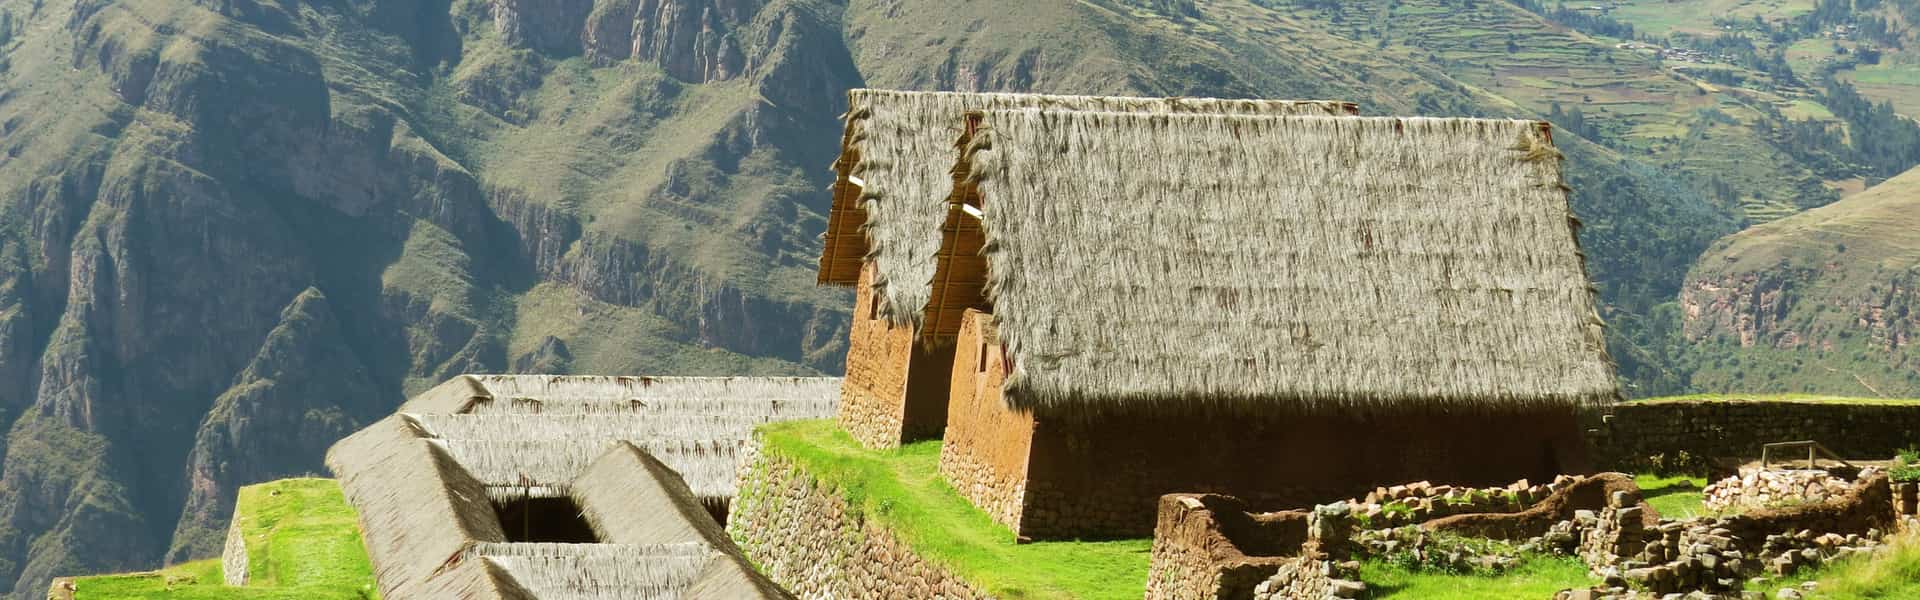  Huchuy Qosqo Trek to Machu Picchu